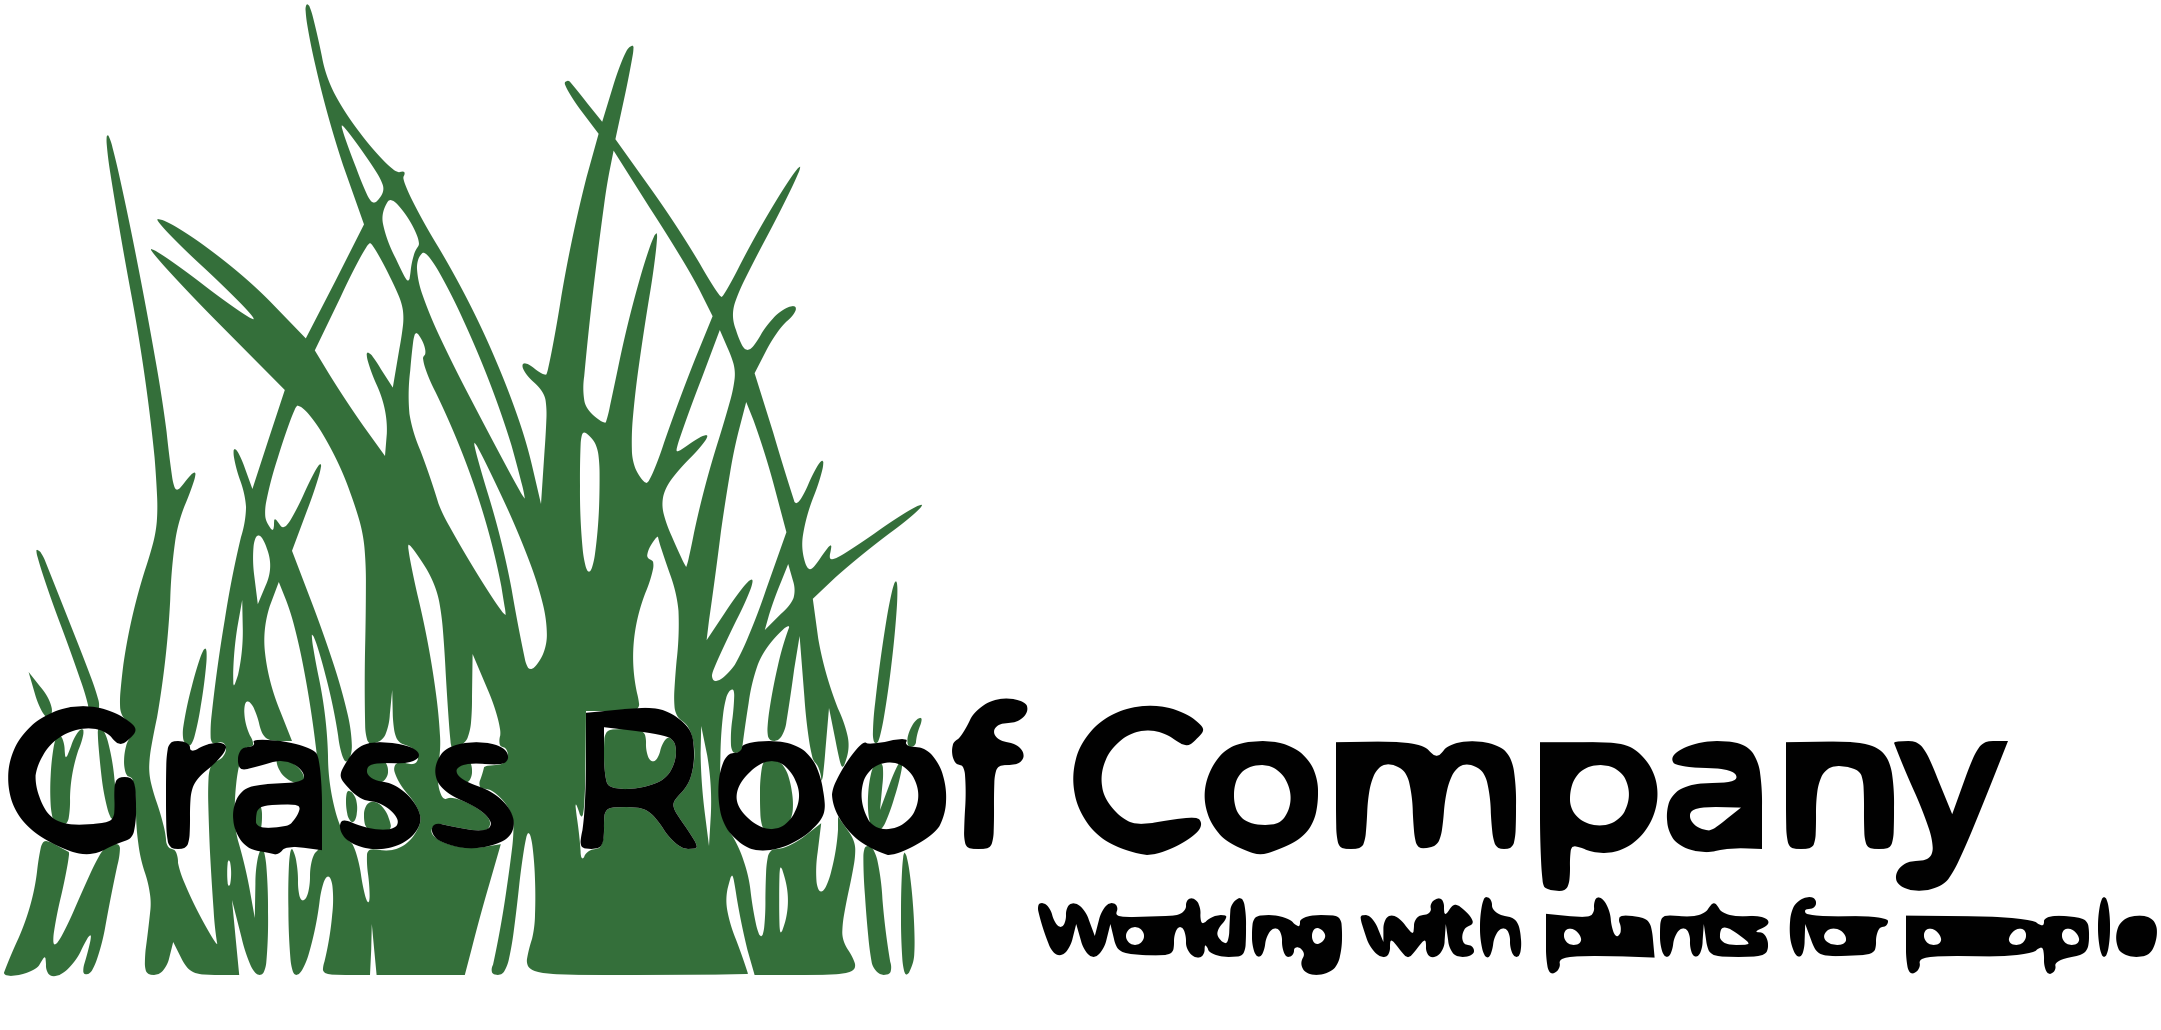 Grass Roof Company